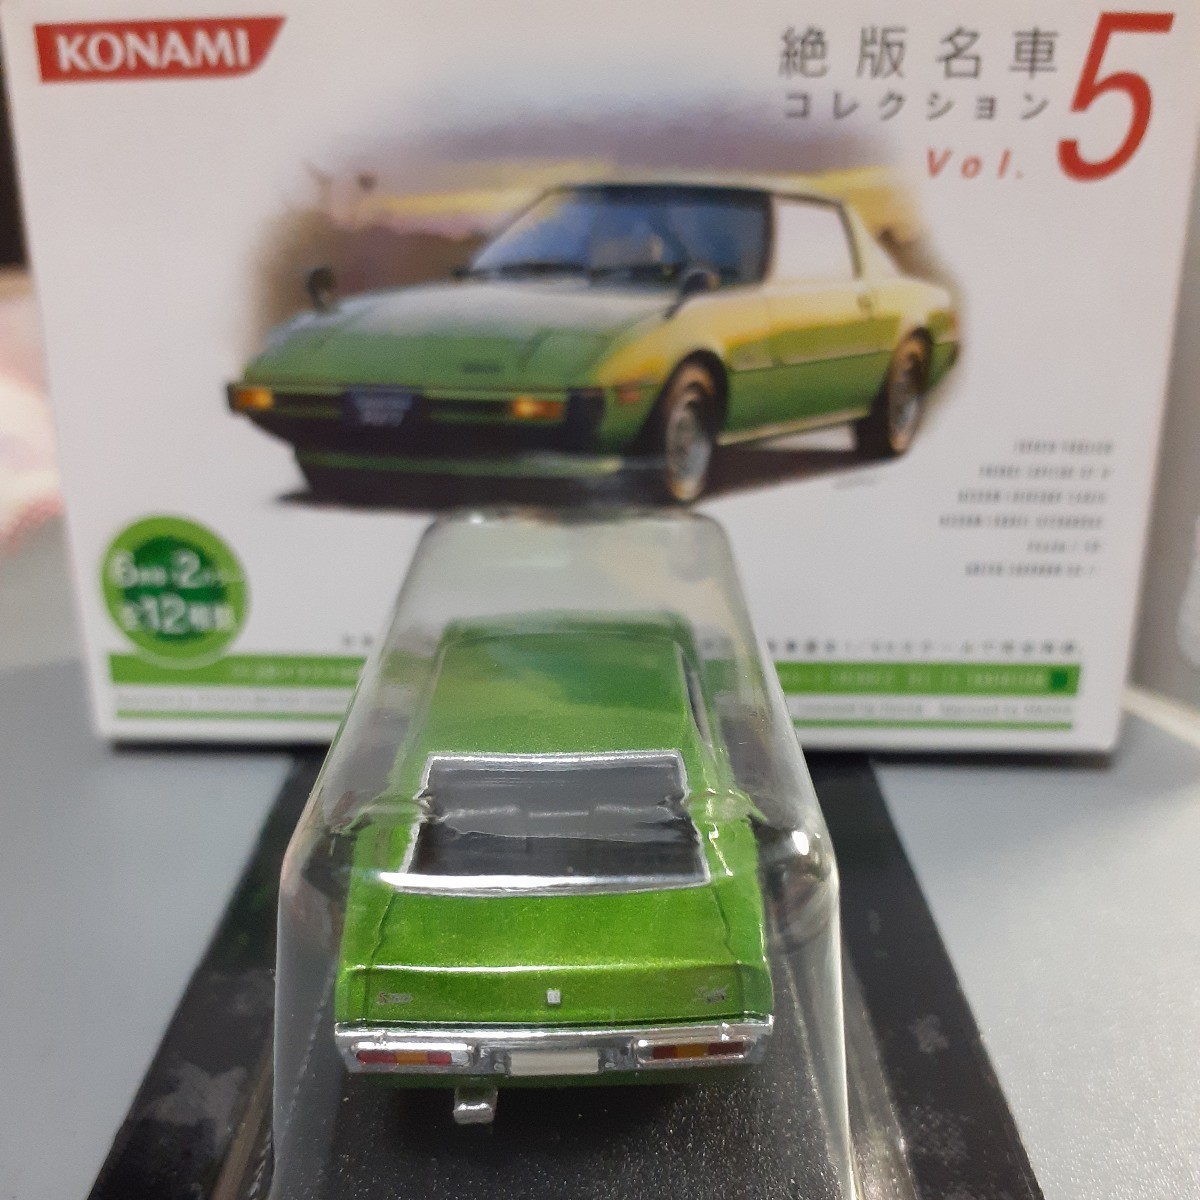 [1B] Konami 1/64 out of print famous car collection Vol.5 Nissan Laurel HT2000SGX metallic green 1972 year 